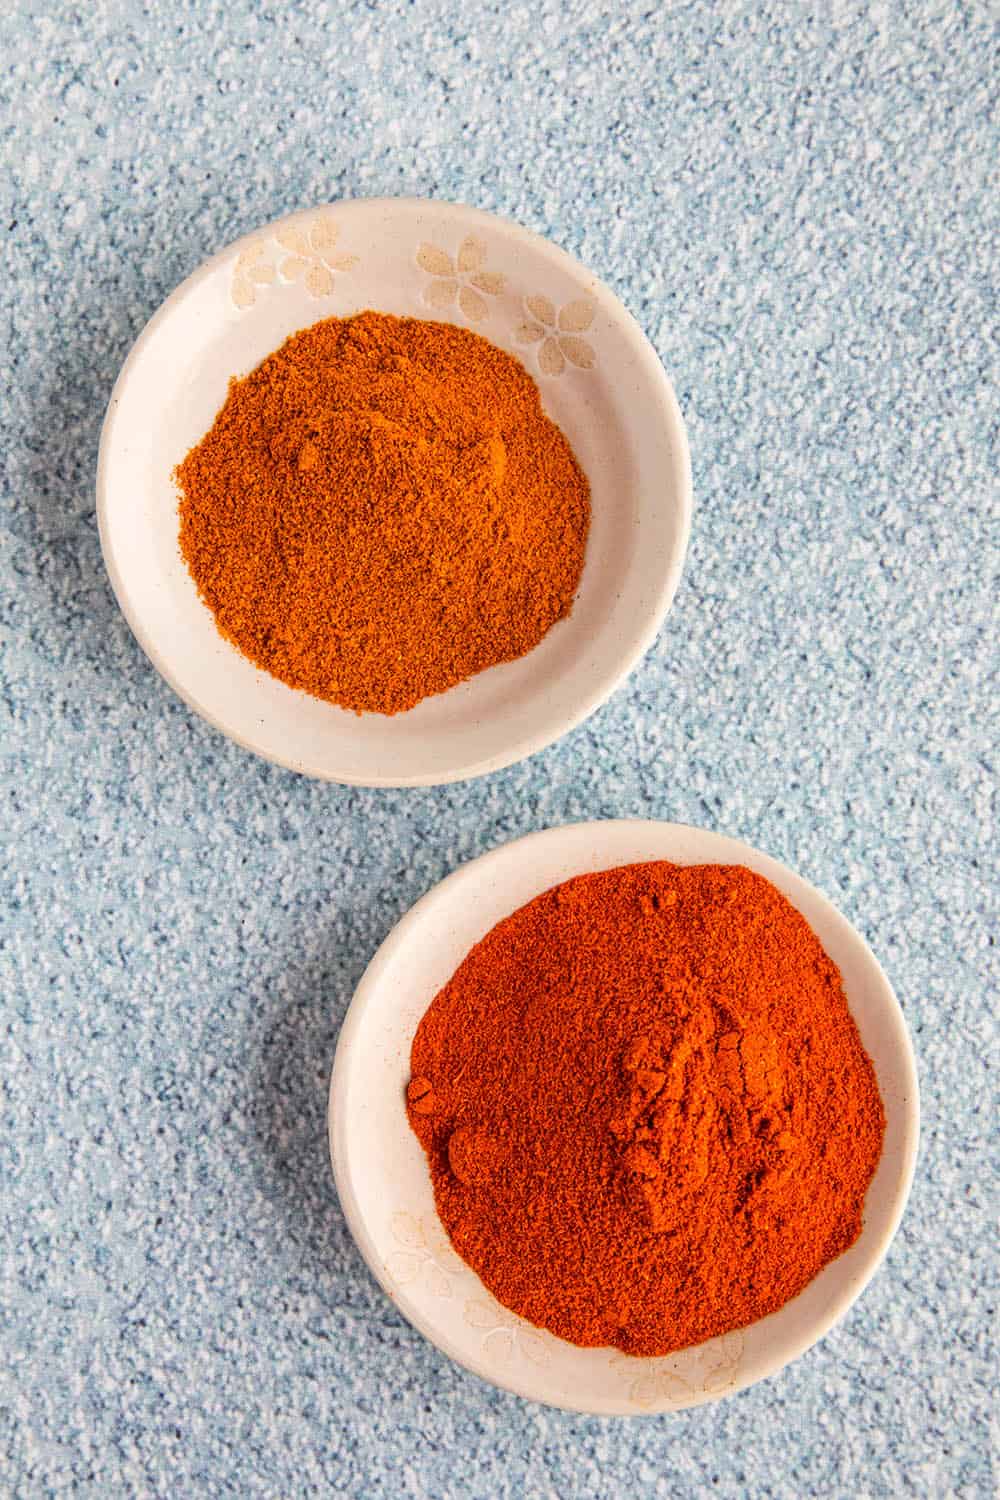 The chili powders that go into homemade Creole seasoning